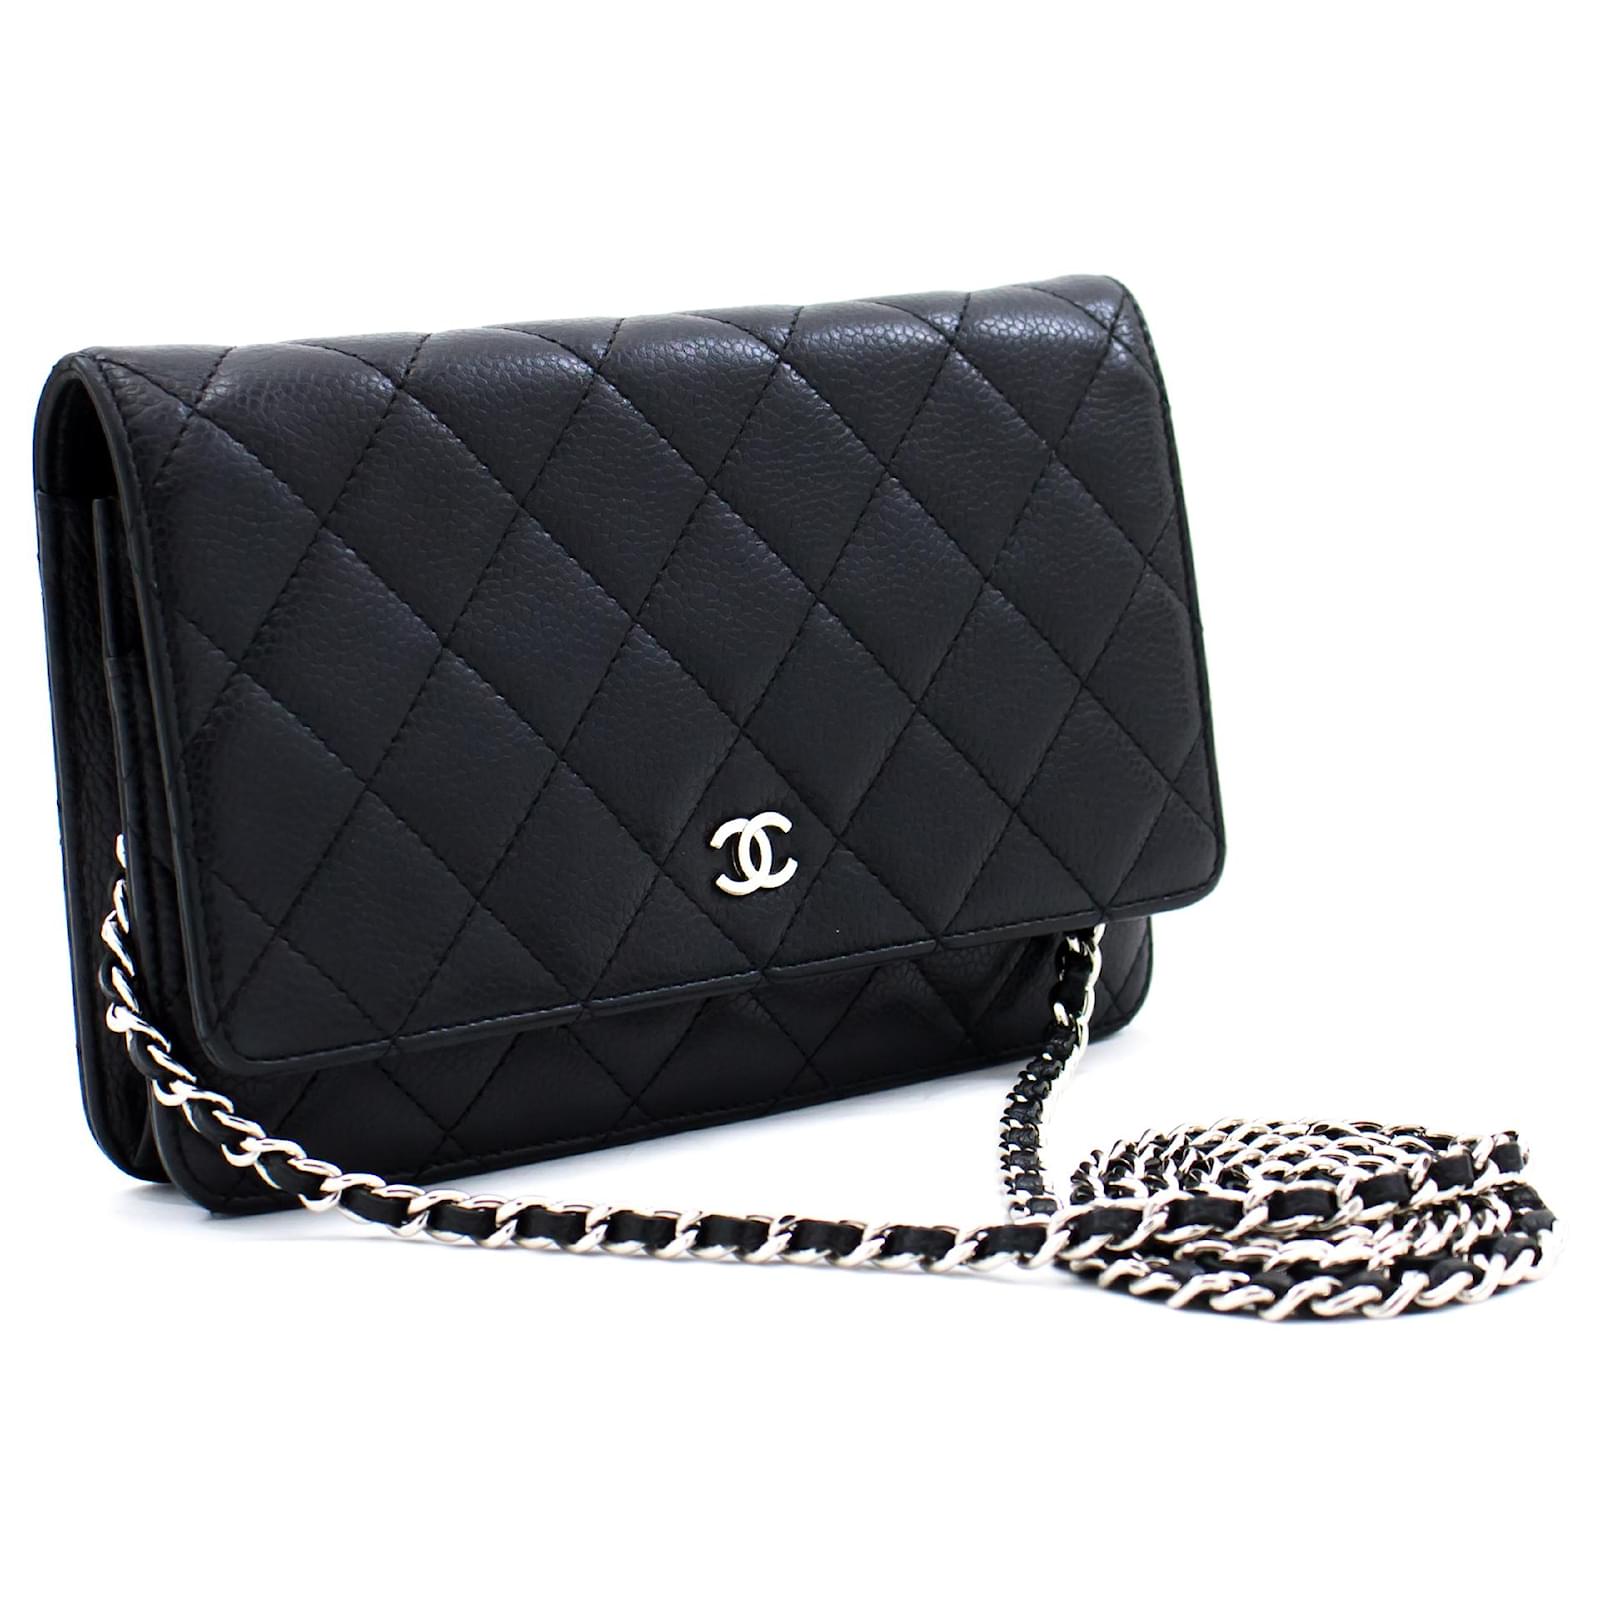 Handbags Chanel Chanel Caviar Wallet on Chain Woc Black Shoulder Bag Crossbody